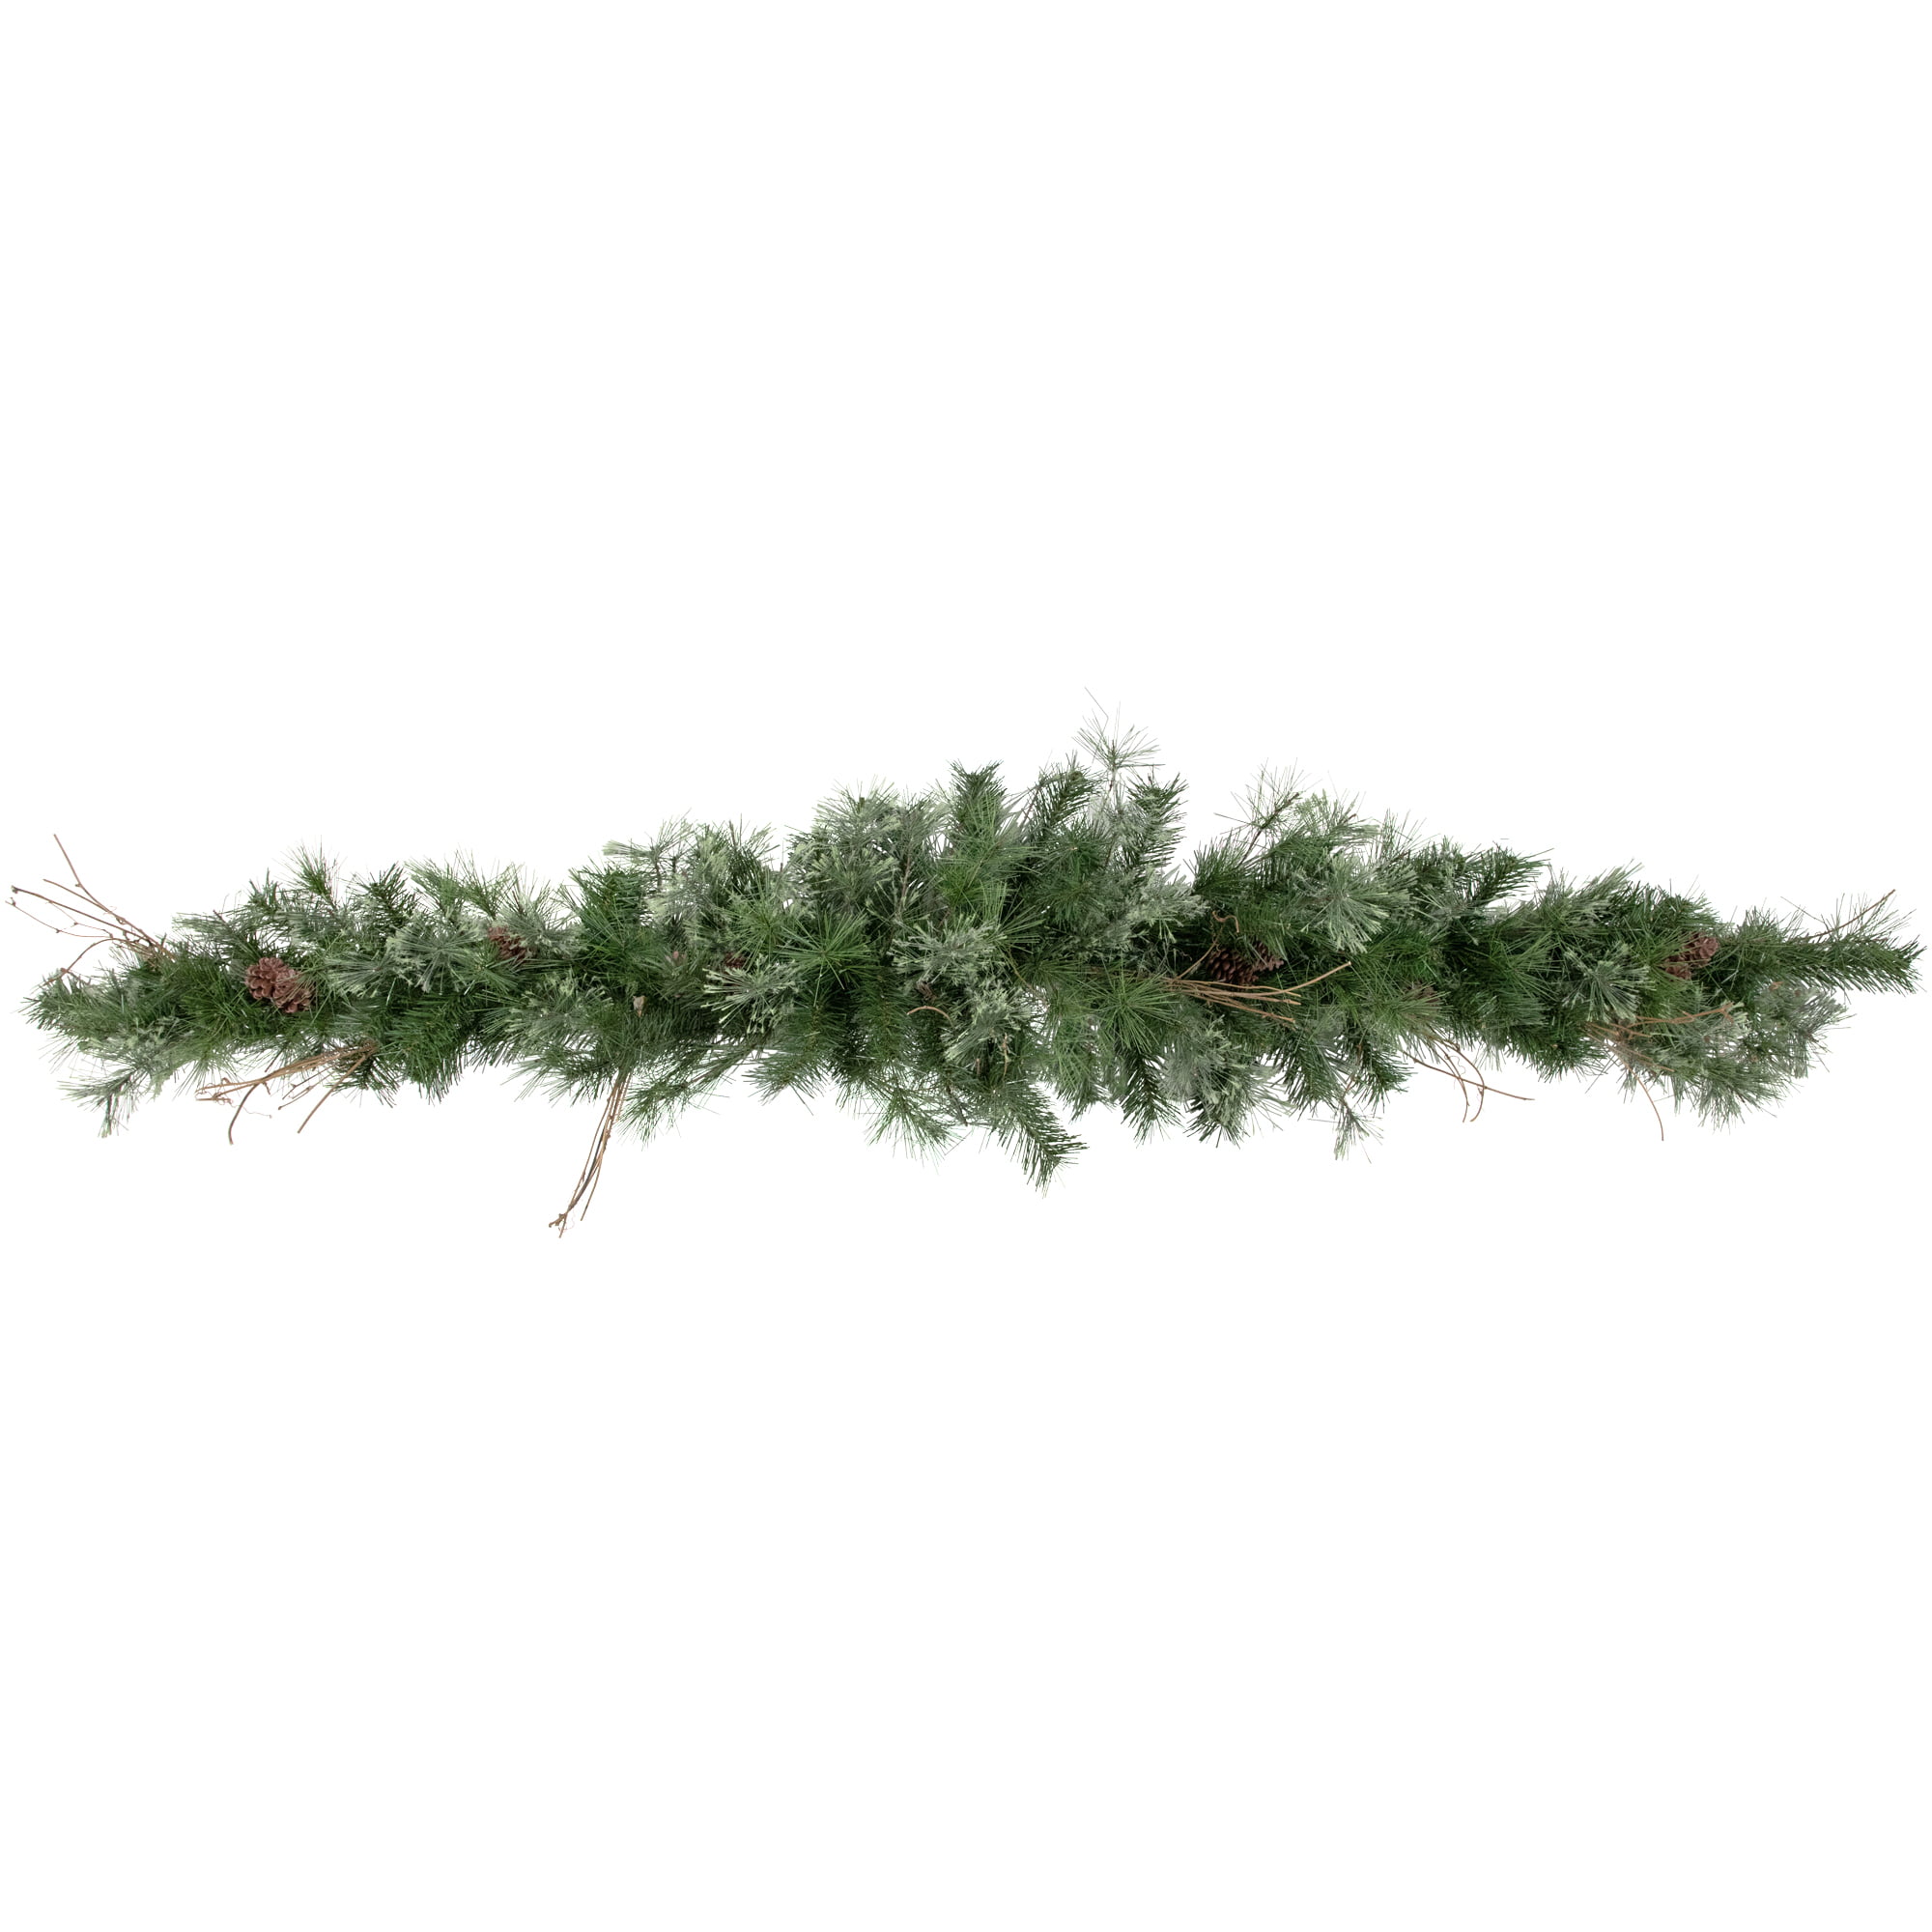 Northlight 9' x 12inch Royal Oregon Pine Artificial Christmas Garland - Unlit, Green